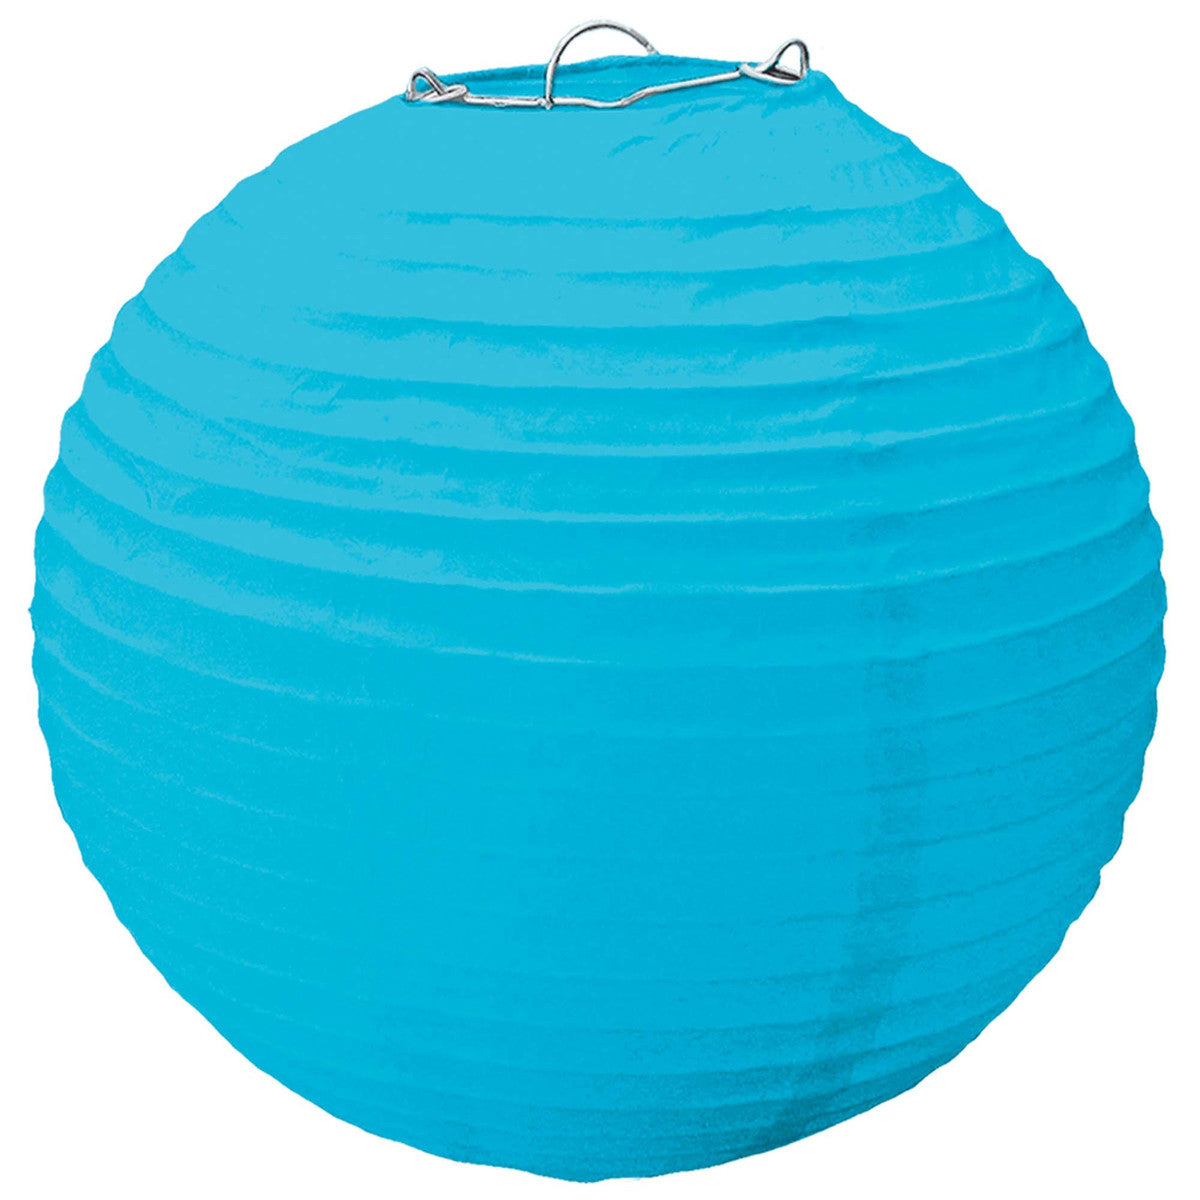 light blue paper lanterns for sale online in Dubai